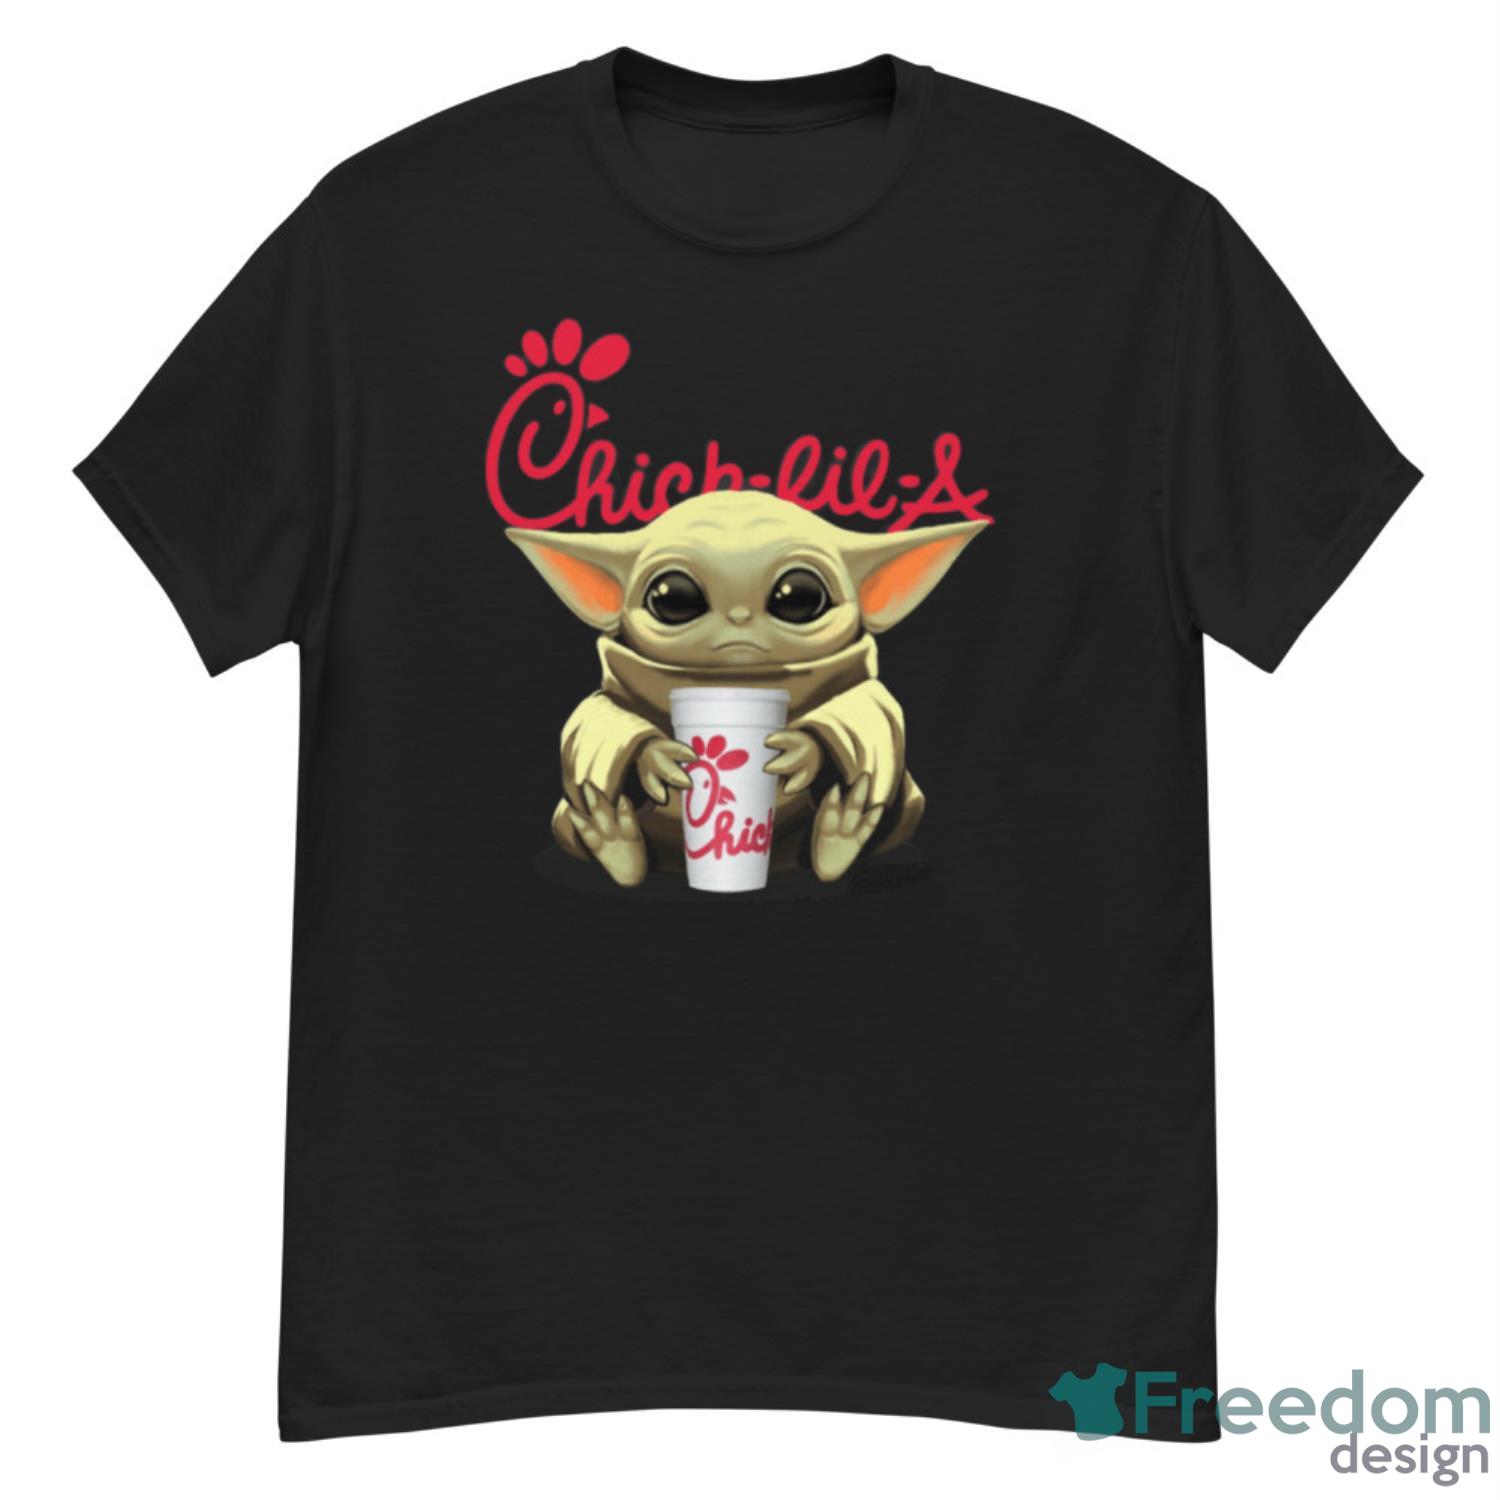 Baby Yoda Hug Boston Red Sox Star War Shirt Hoodie